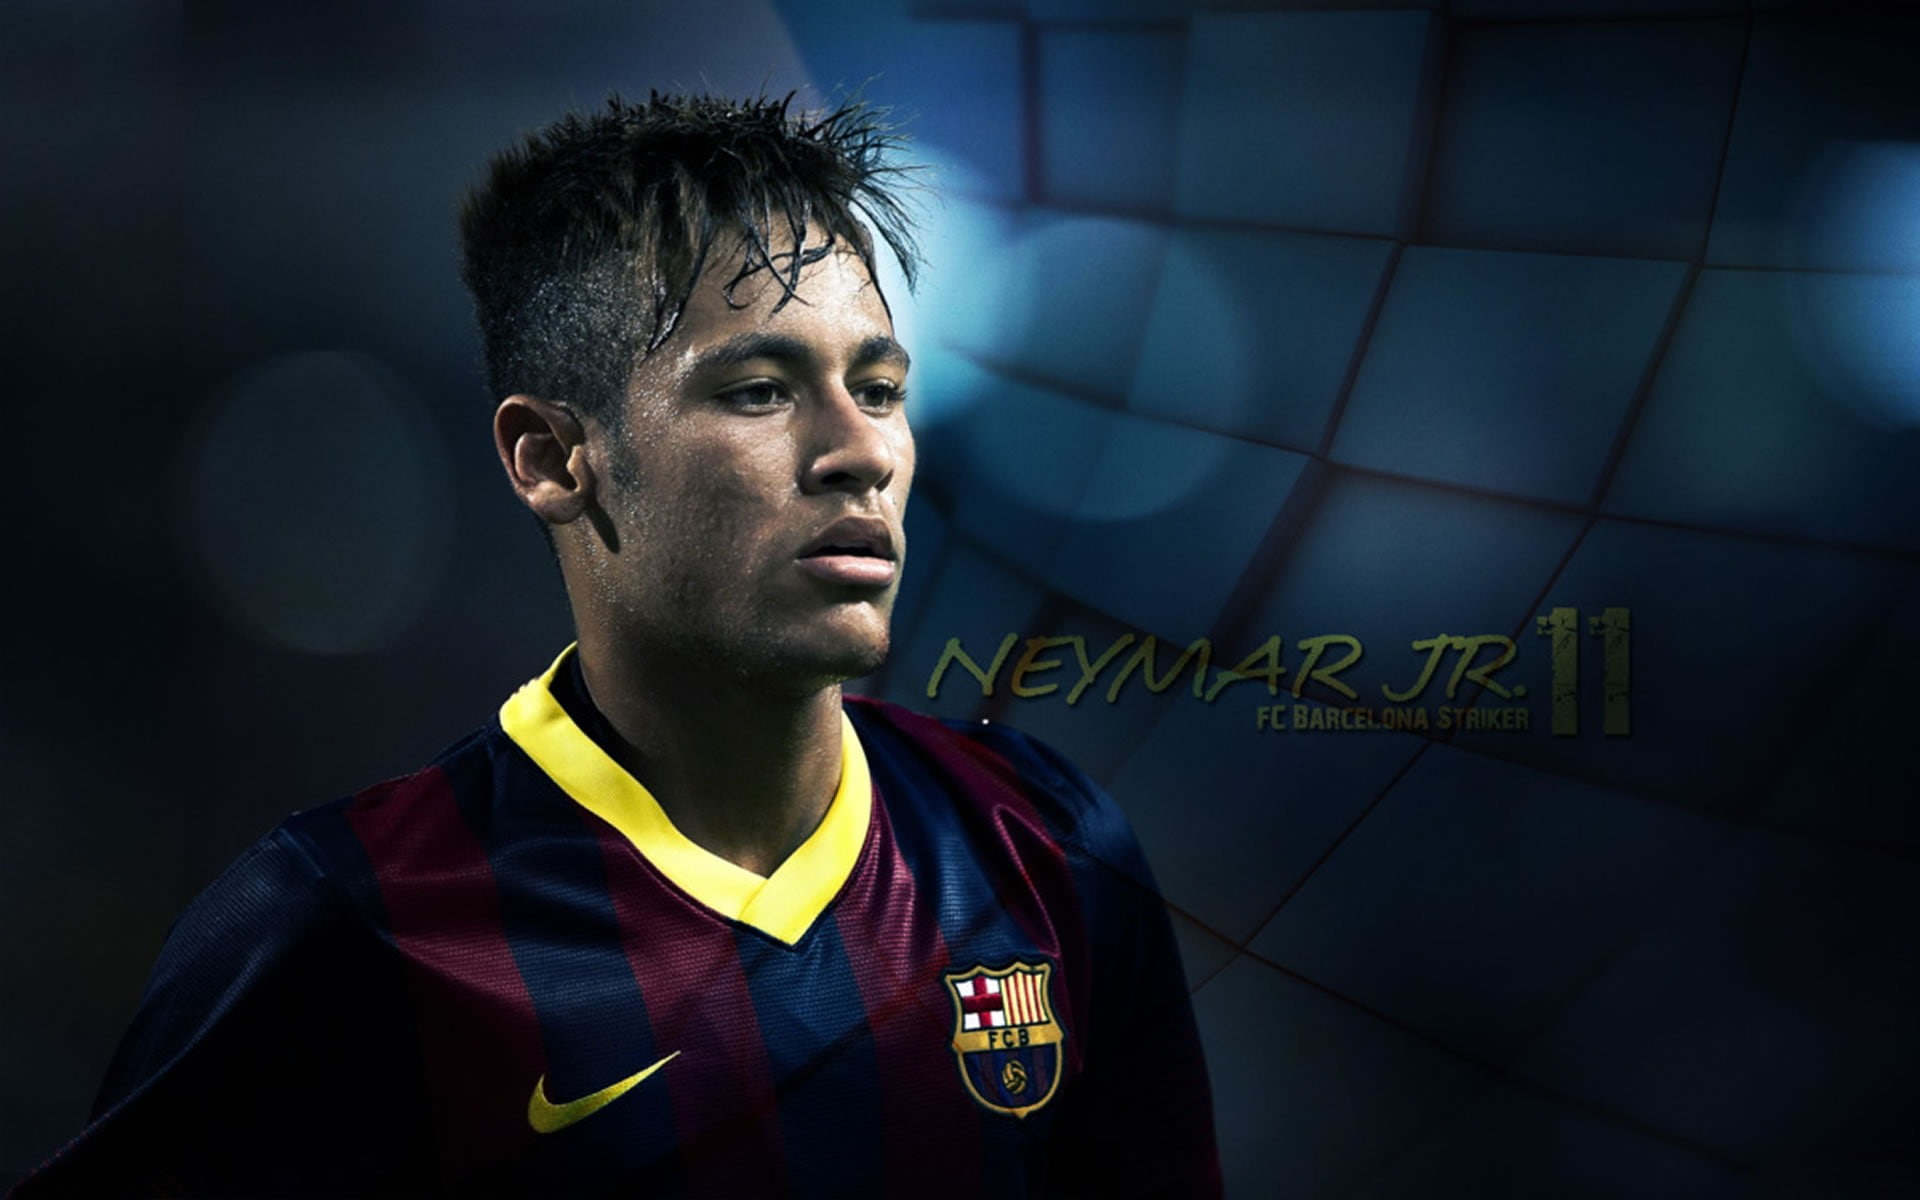 Neymar JR-FIFA BALLON DOR 2015 Wallpaper, one person, portrait